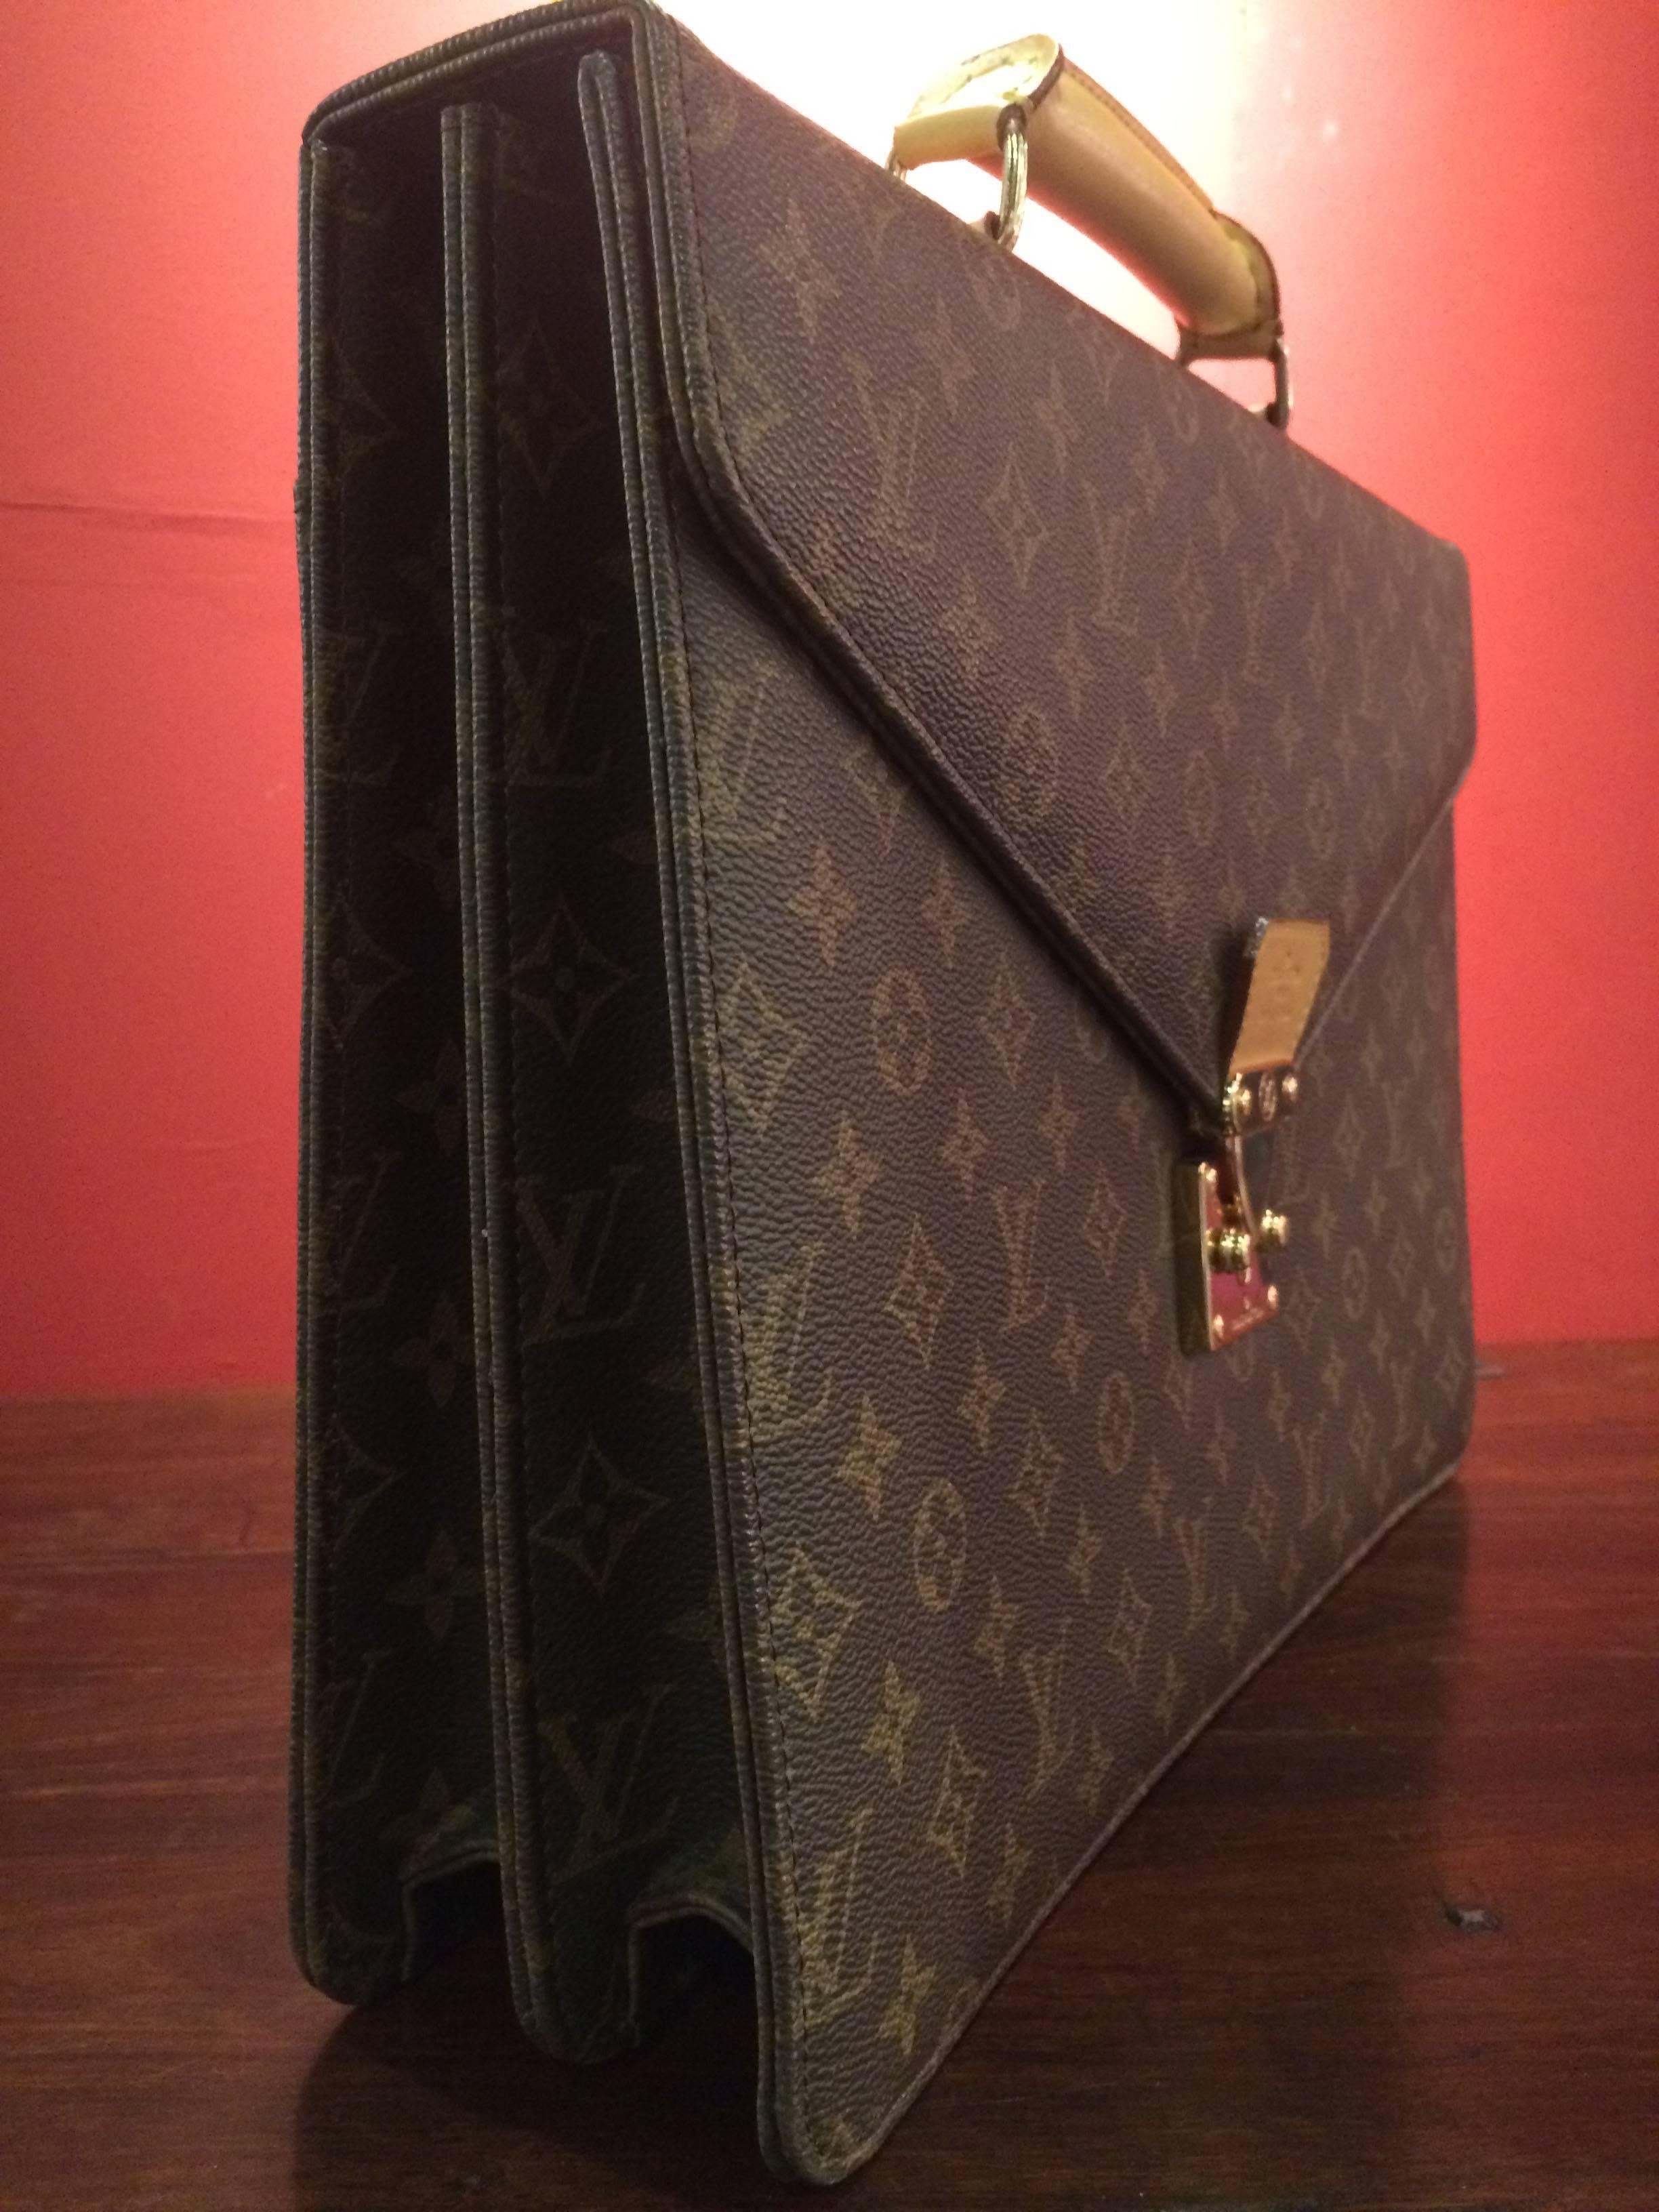 Monogramed Louis Vuitton Serviette Consieller Briefcase.
Pale Beige swede lining.
Zip full length pocket.
Complete with keys.